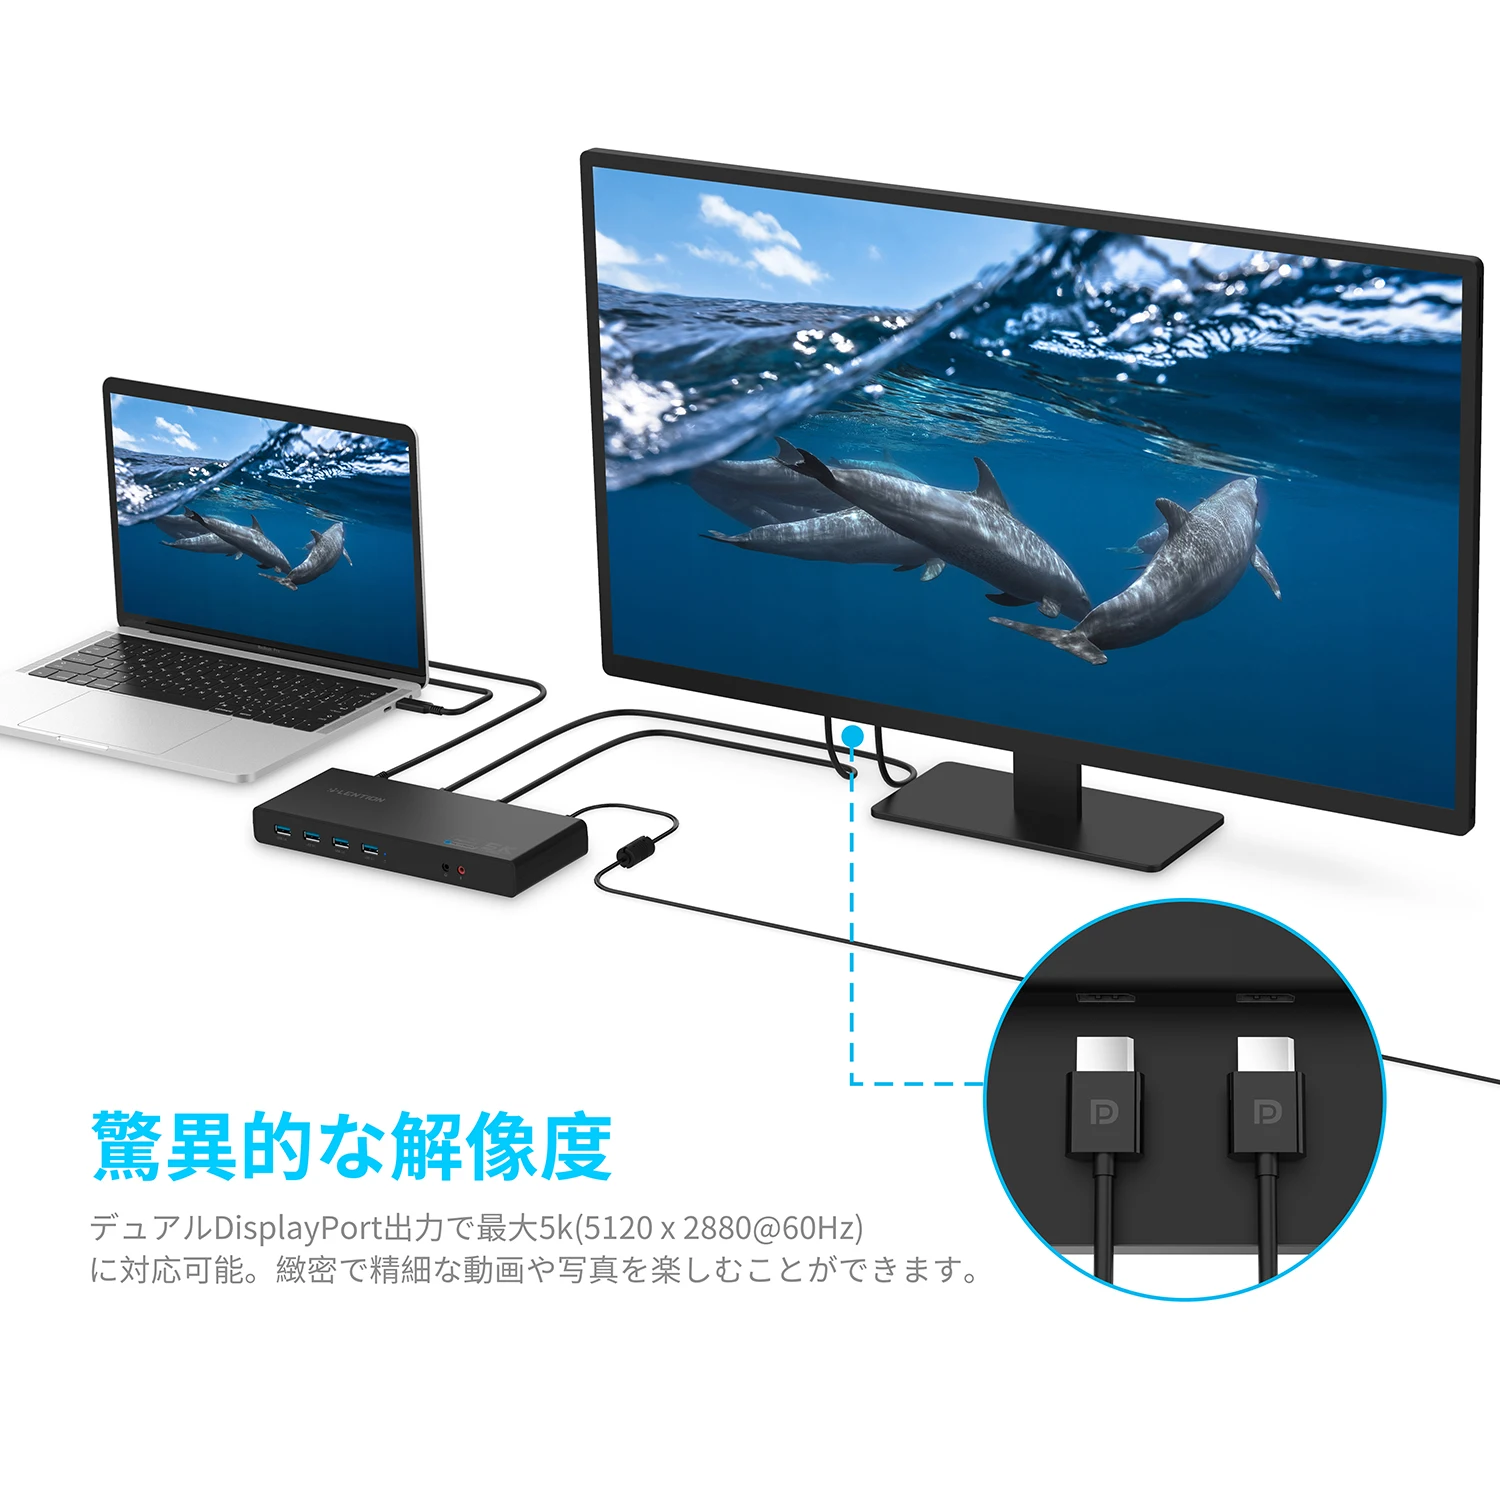 Lention 5K USB C & USB A Docking Station with HDMI & DisplayPort Dual 4K Displays, Gigabit Ethernet, Audio Adapter, 6 USB 3.0